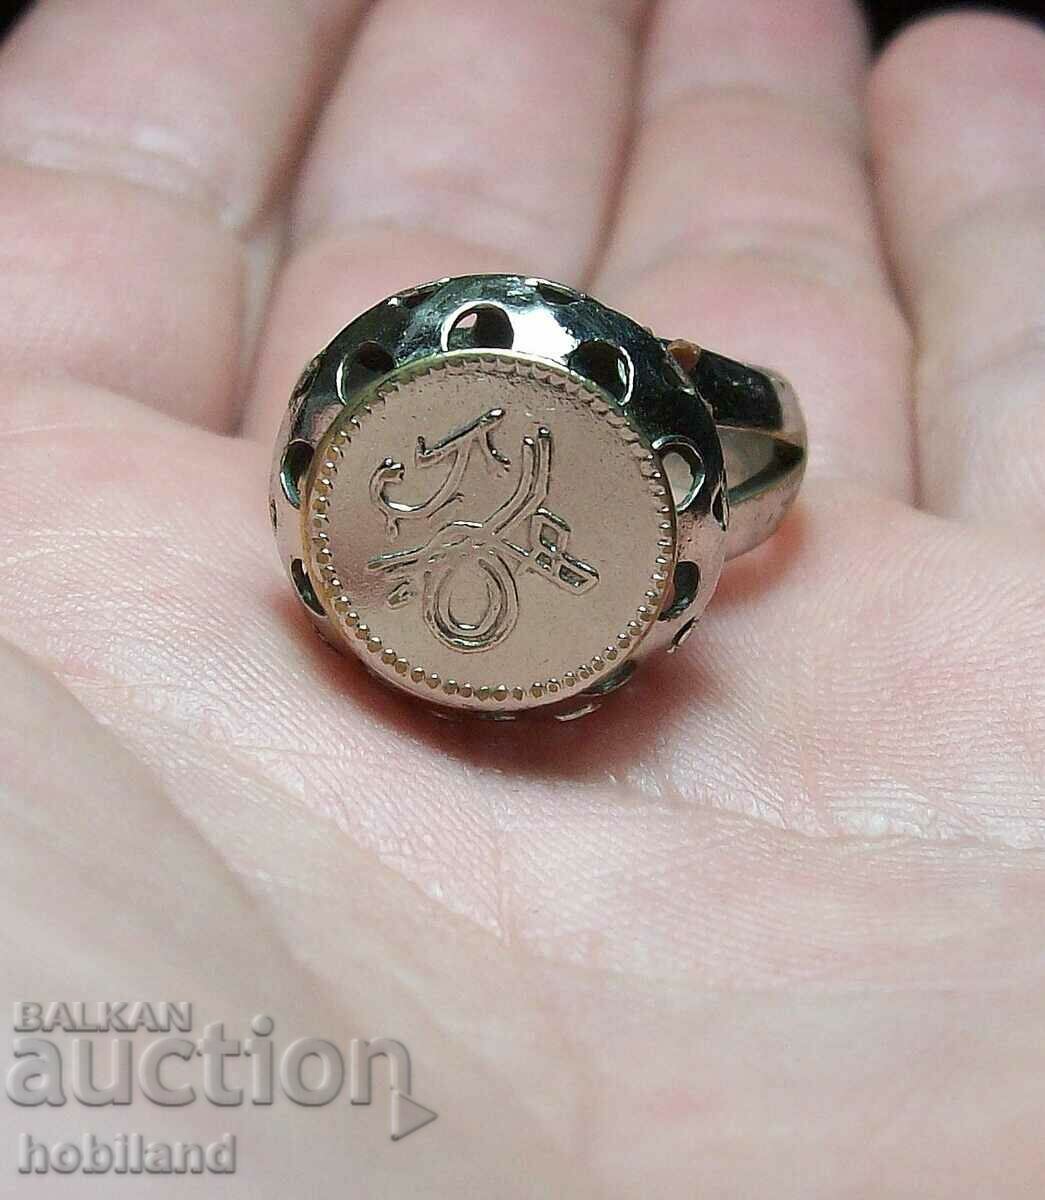 Ottoman tugra ring